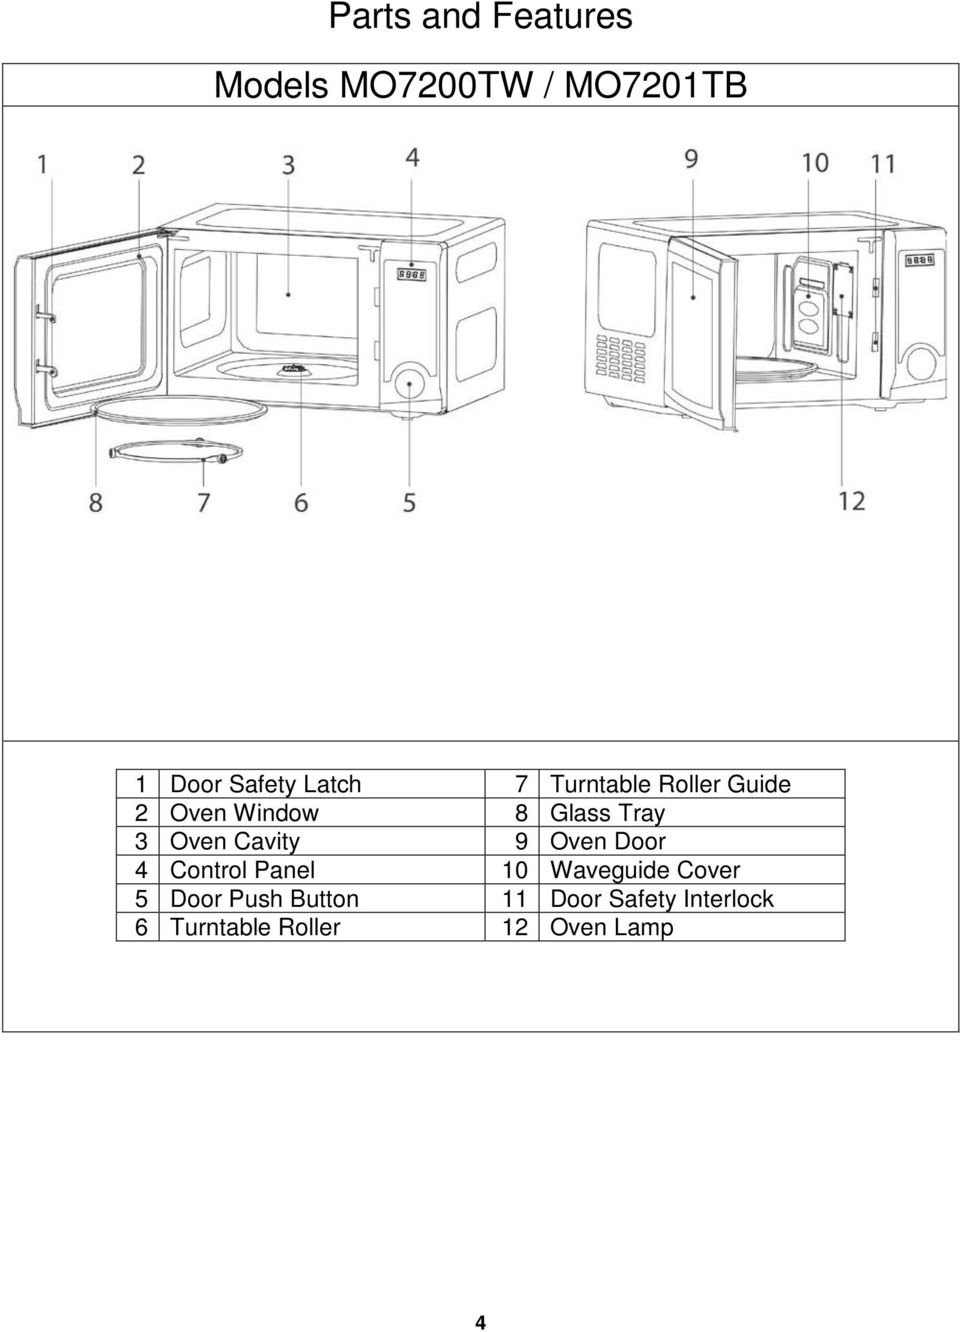 Oven Cavity 9 Oven Door 4 Control Panel 10 Waveguide Cover 5